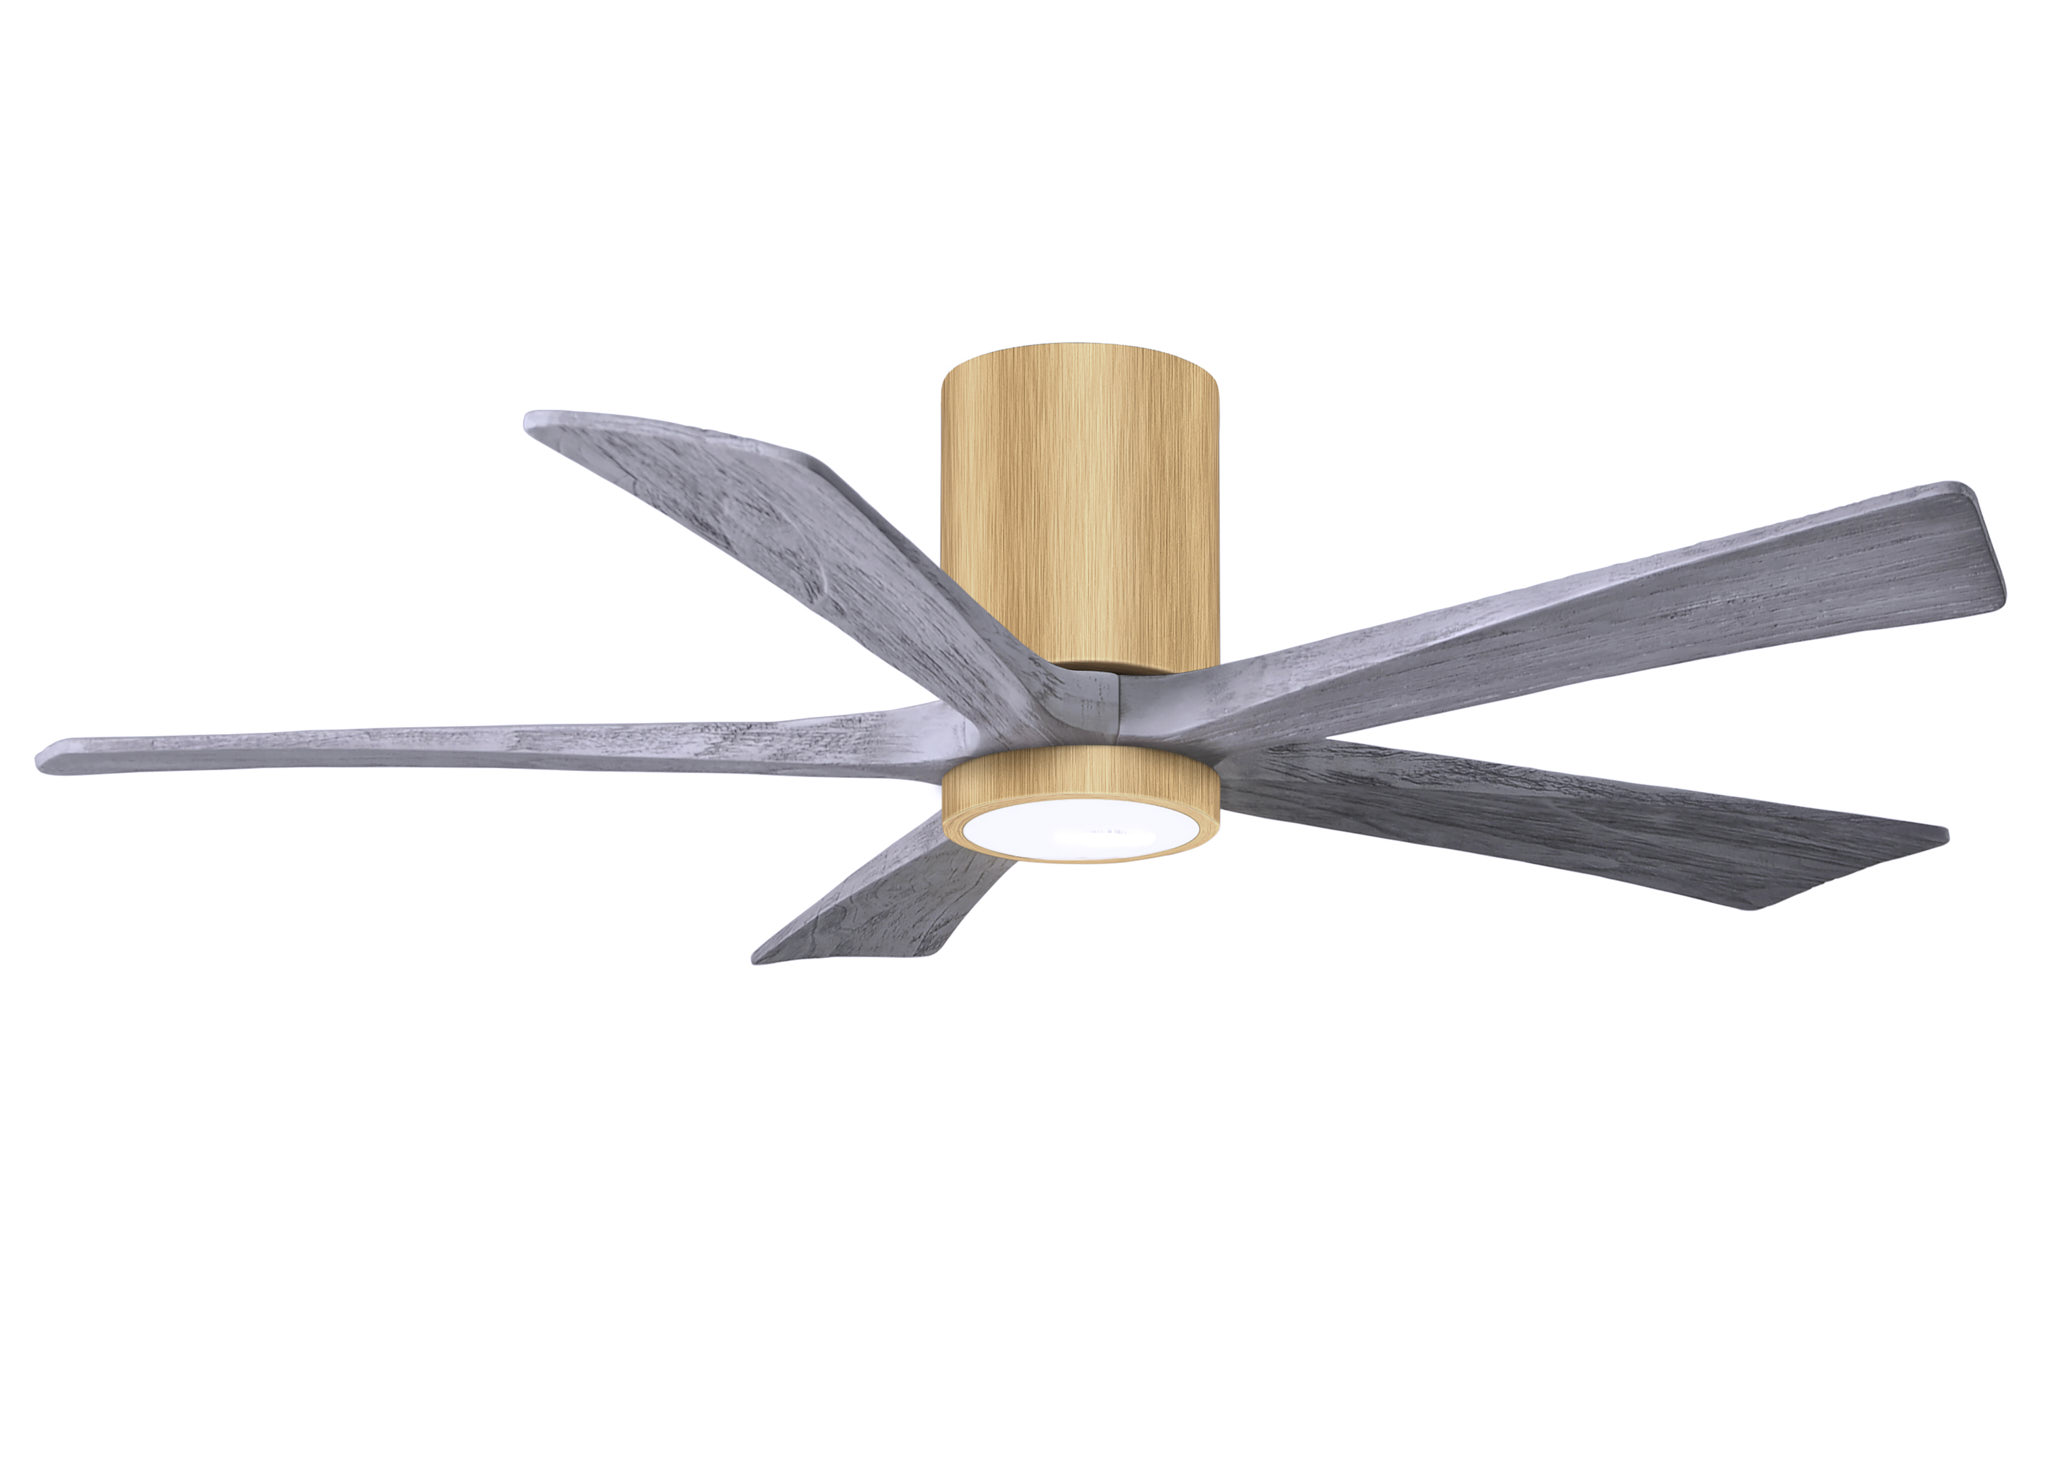 Irene-5HLK 6-speed ceiling fan in light maple finish with 52